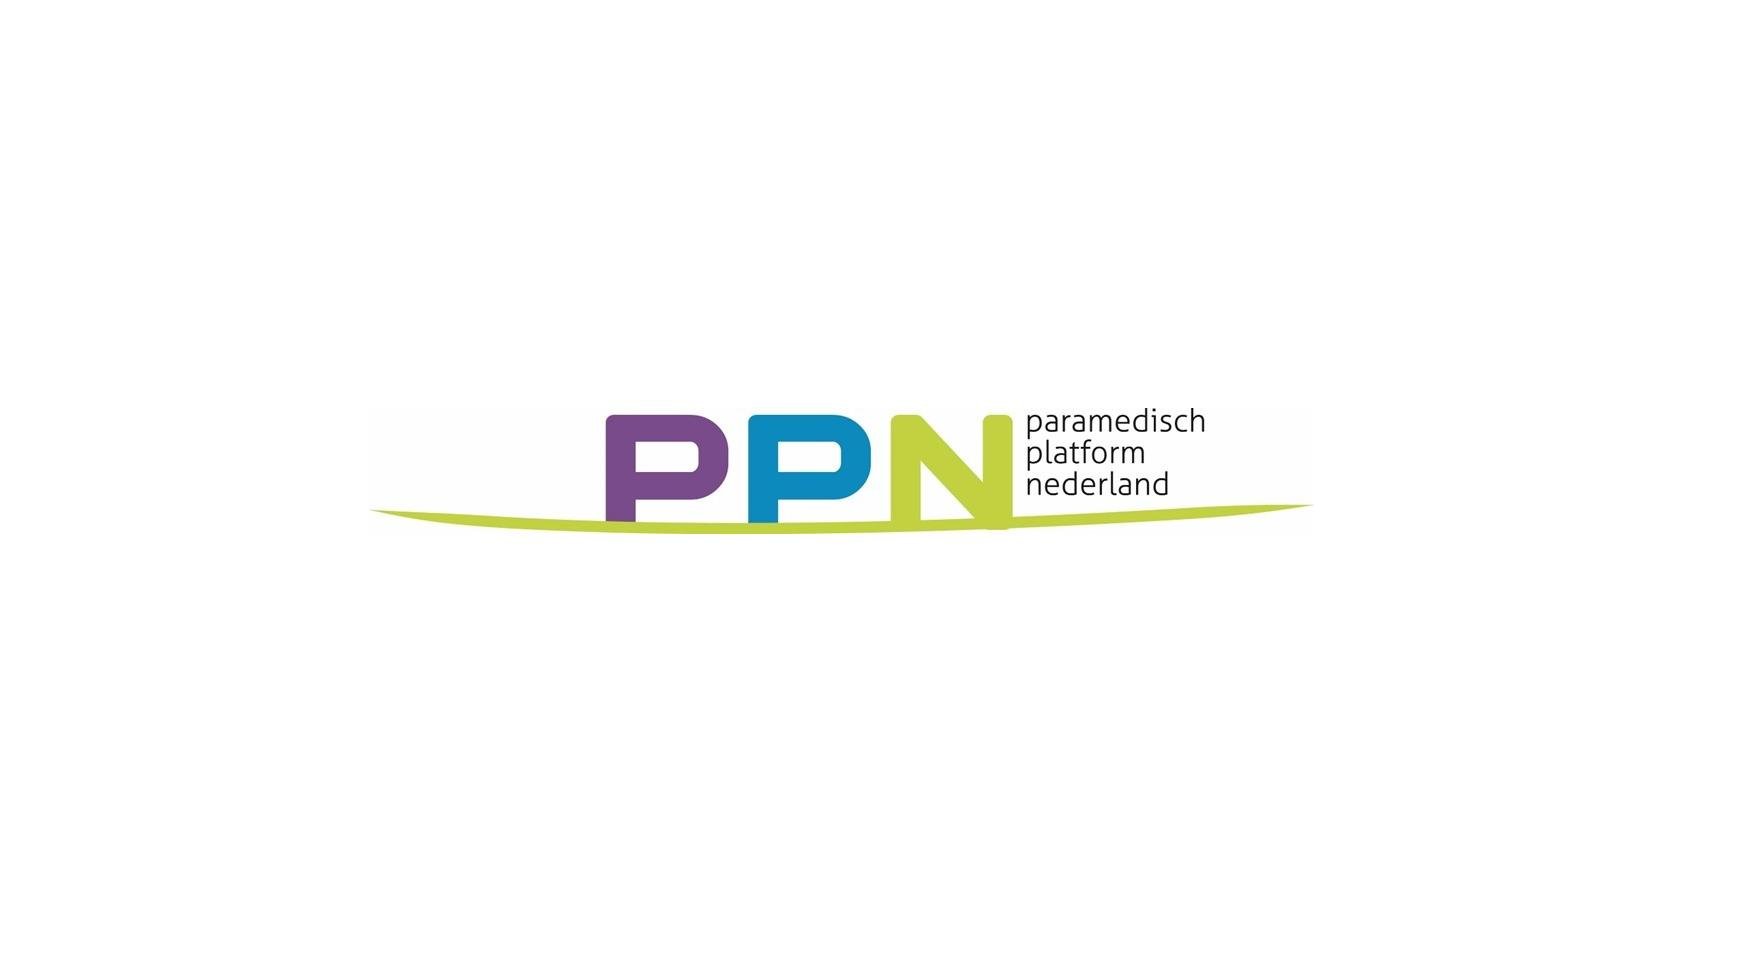 De federatie Paramedisch Platform Nederland (PPN) wordt gevormd door 6 paramedische beroepsverenigingen:

Ergotherapie Nederland (Ergotherapeuten)
NVD (Diëtiste